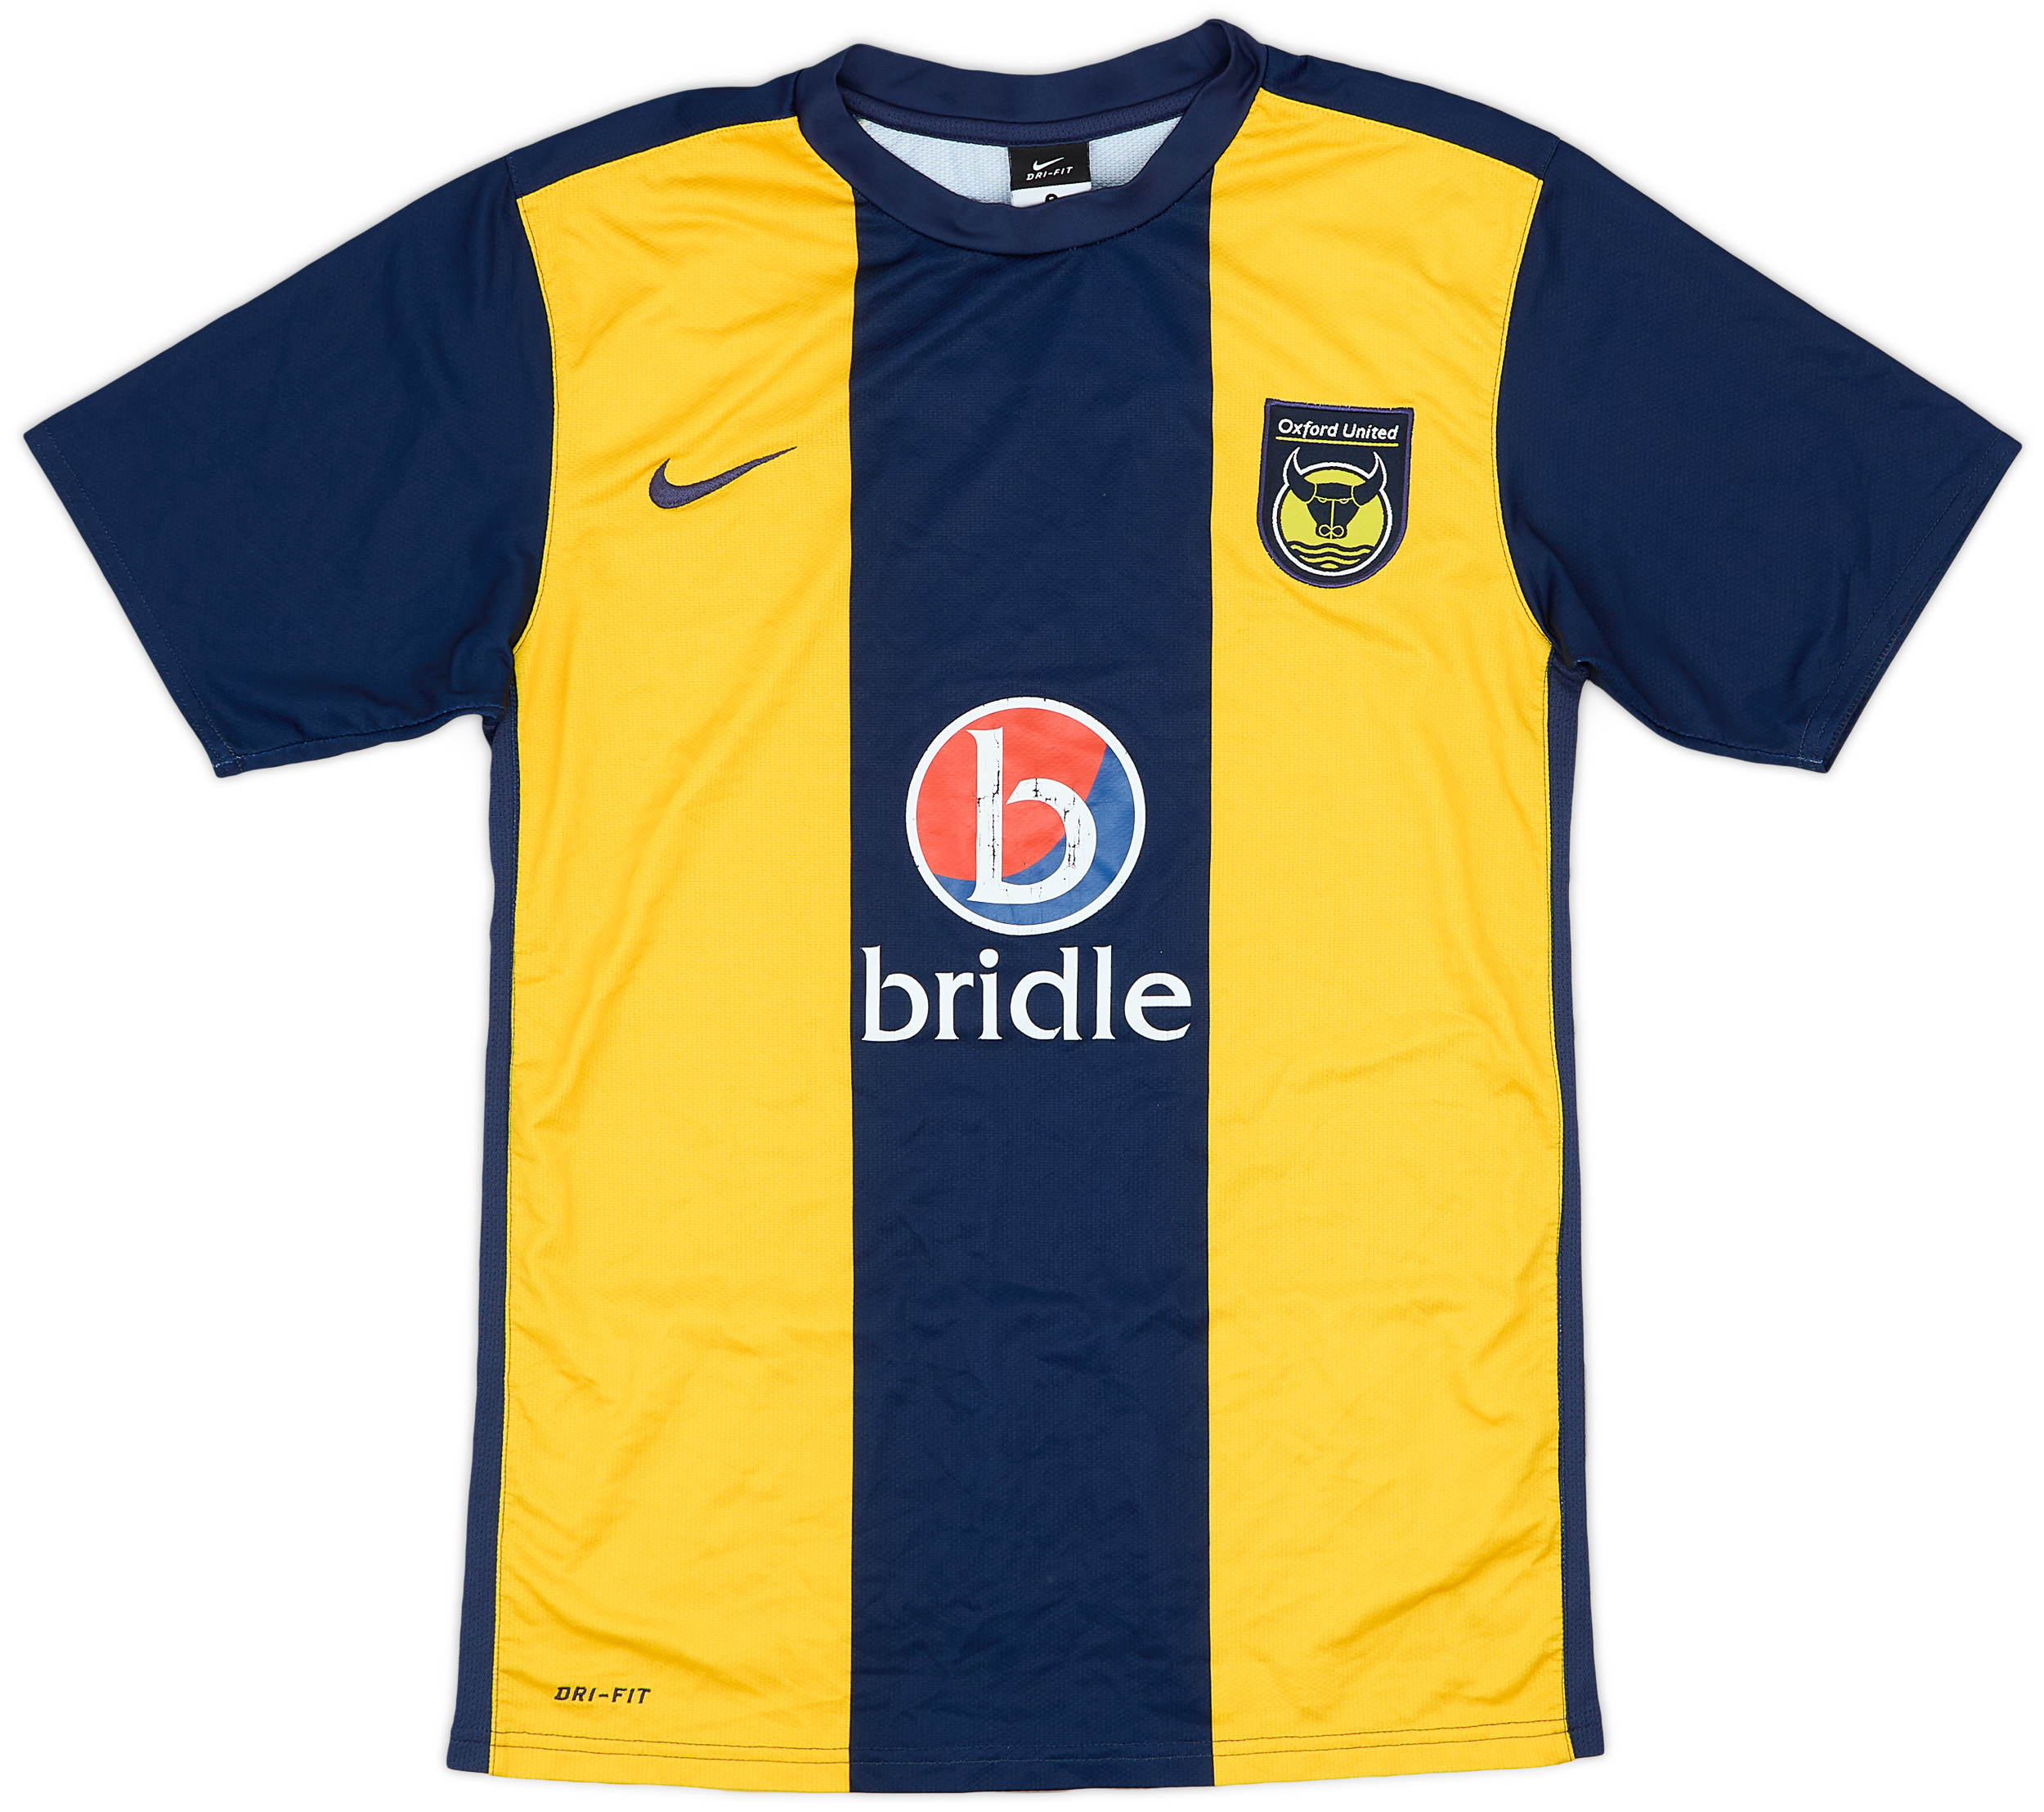 Oxford United  home футболка (Original)